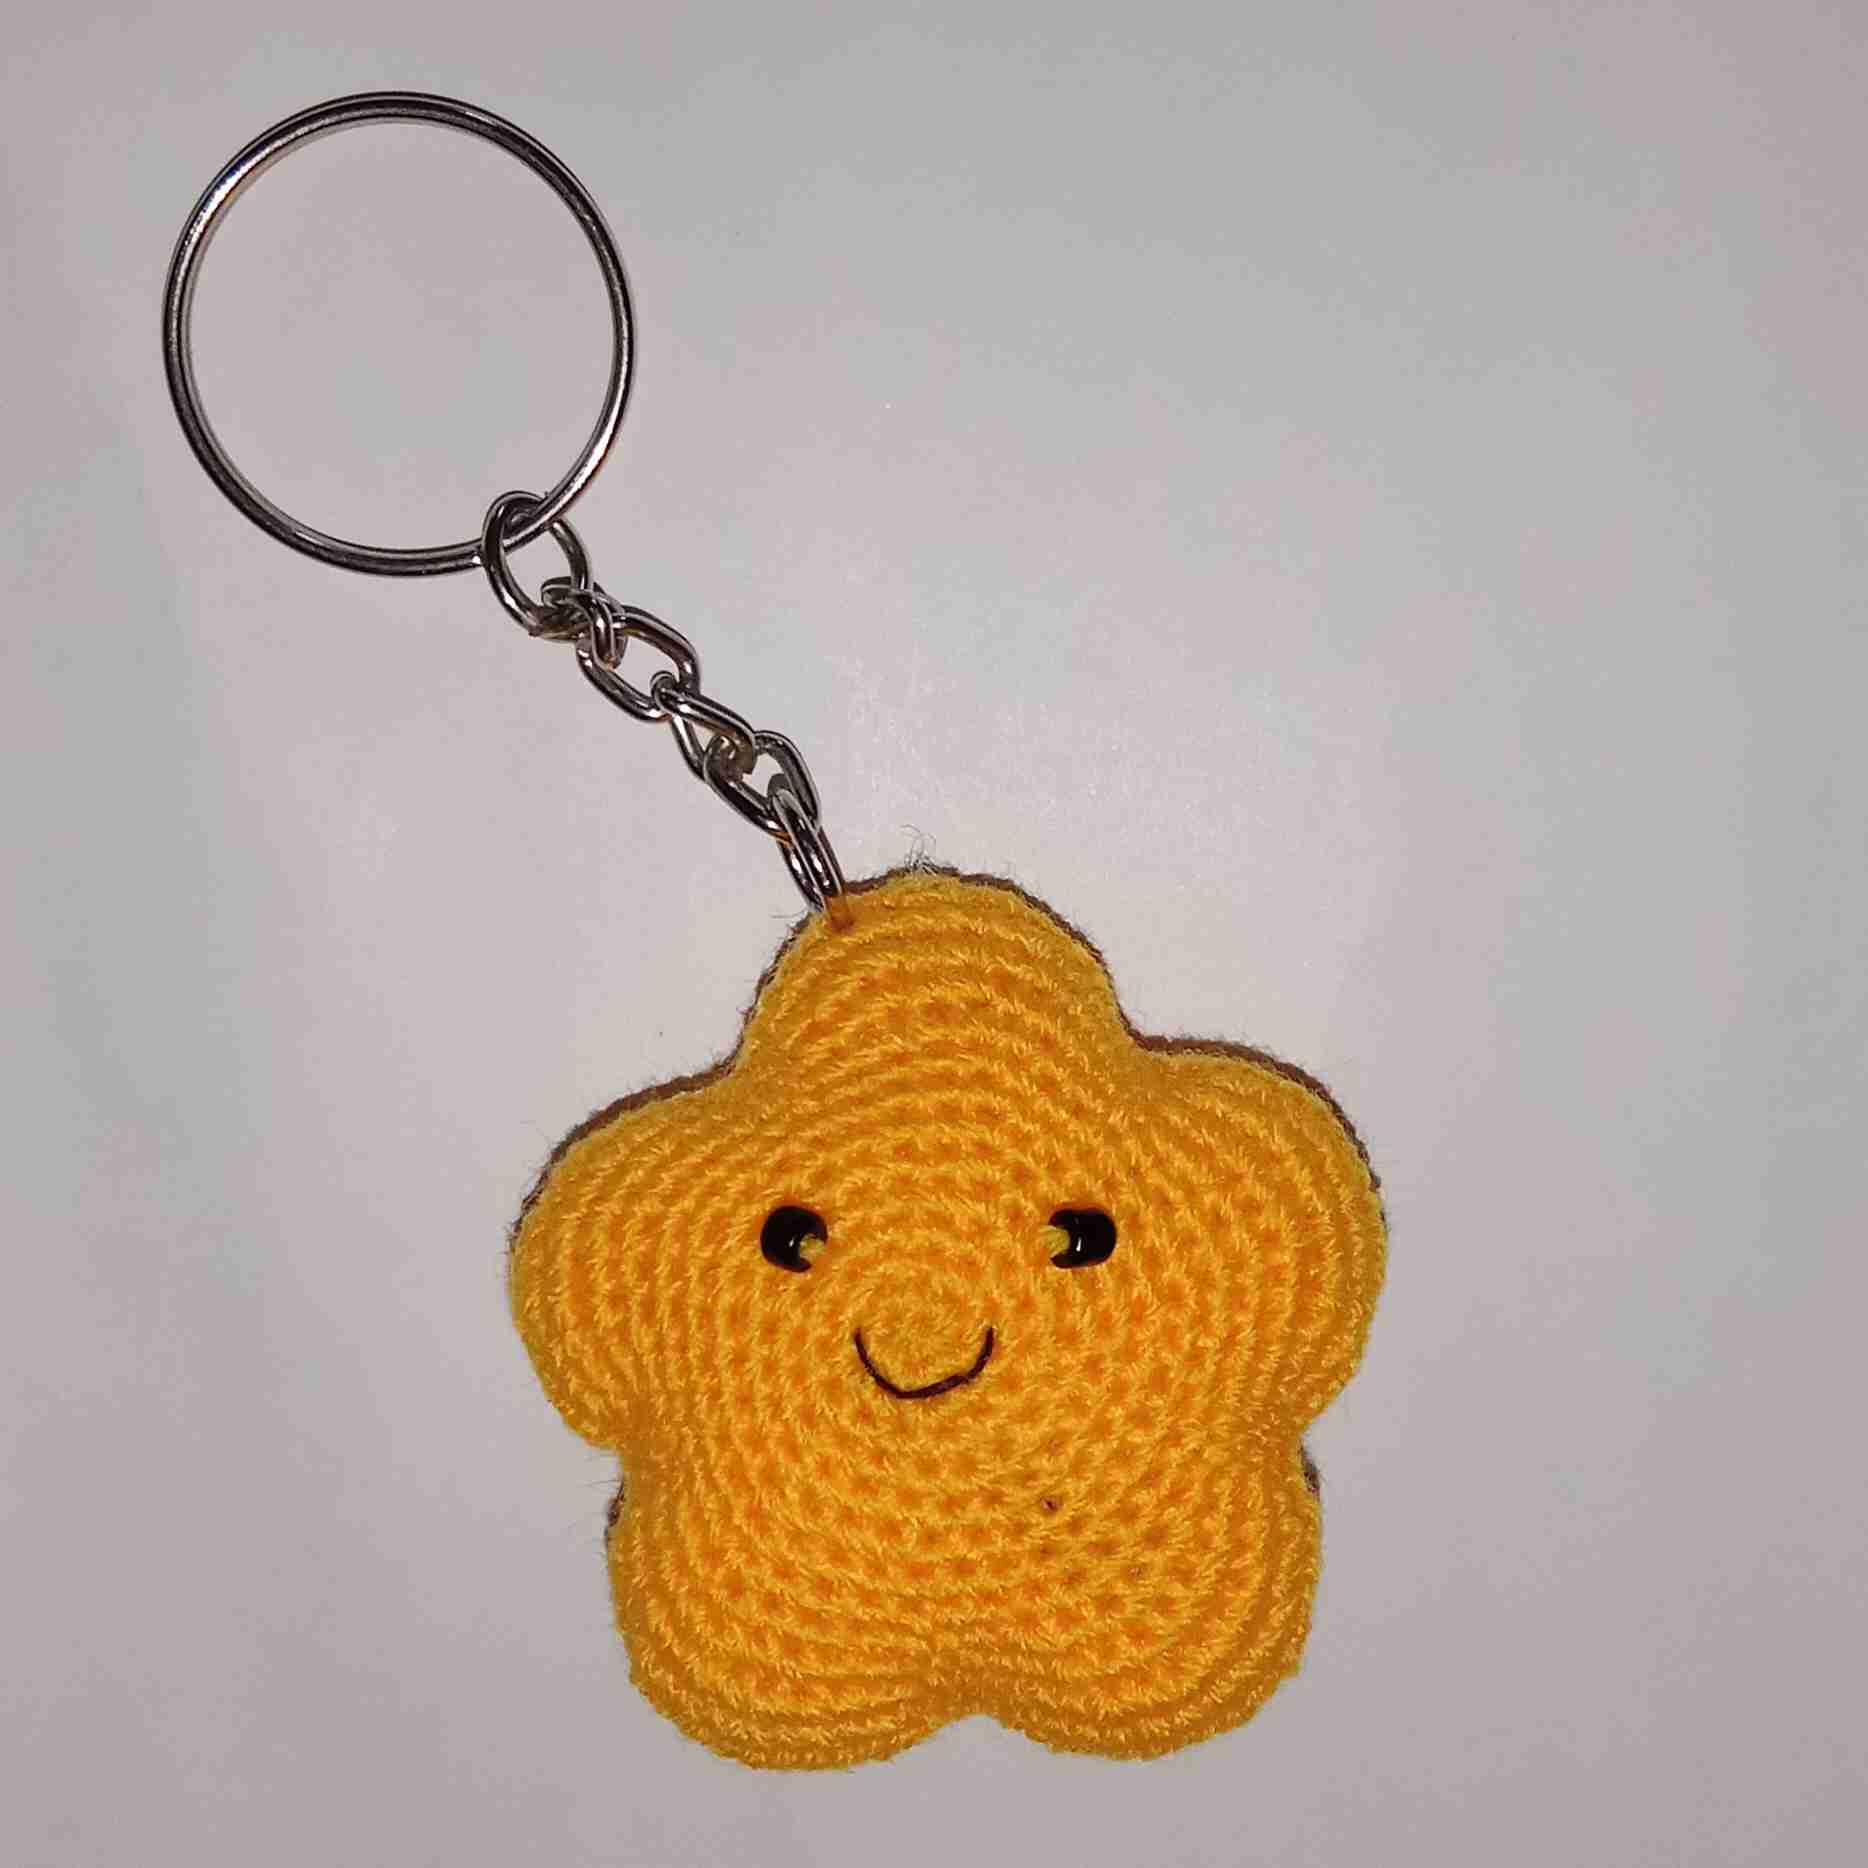 Crochet Woollen Star Keychain